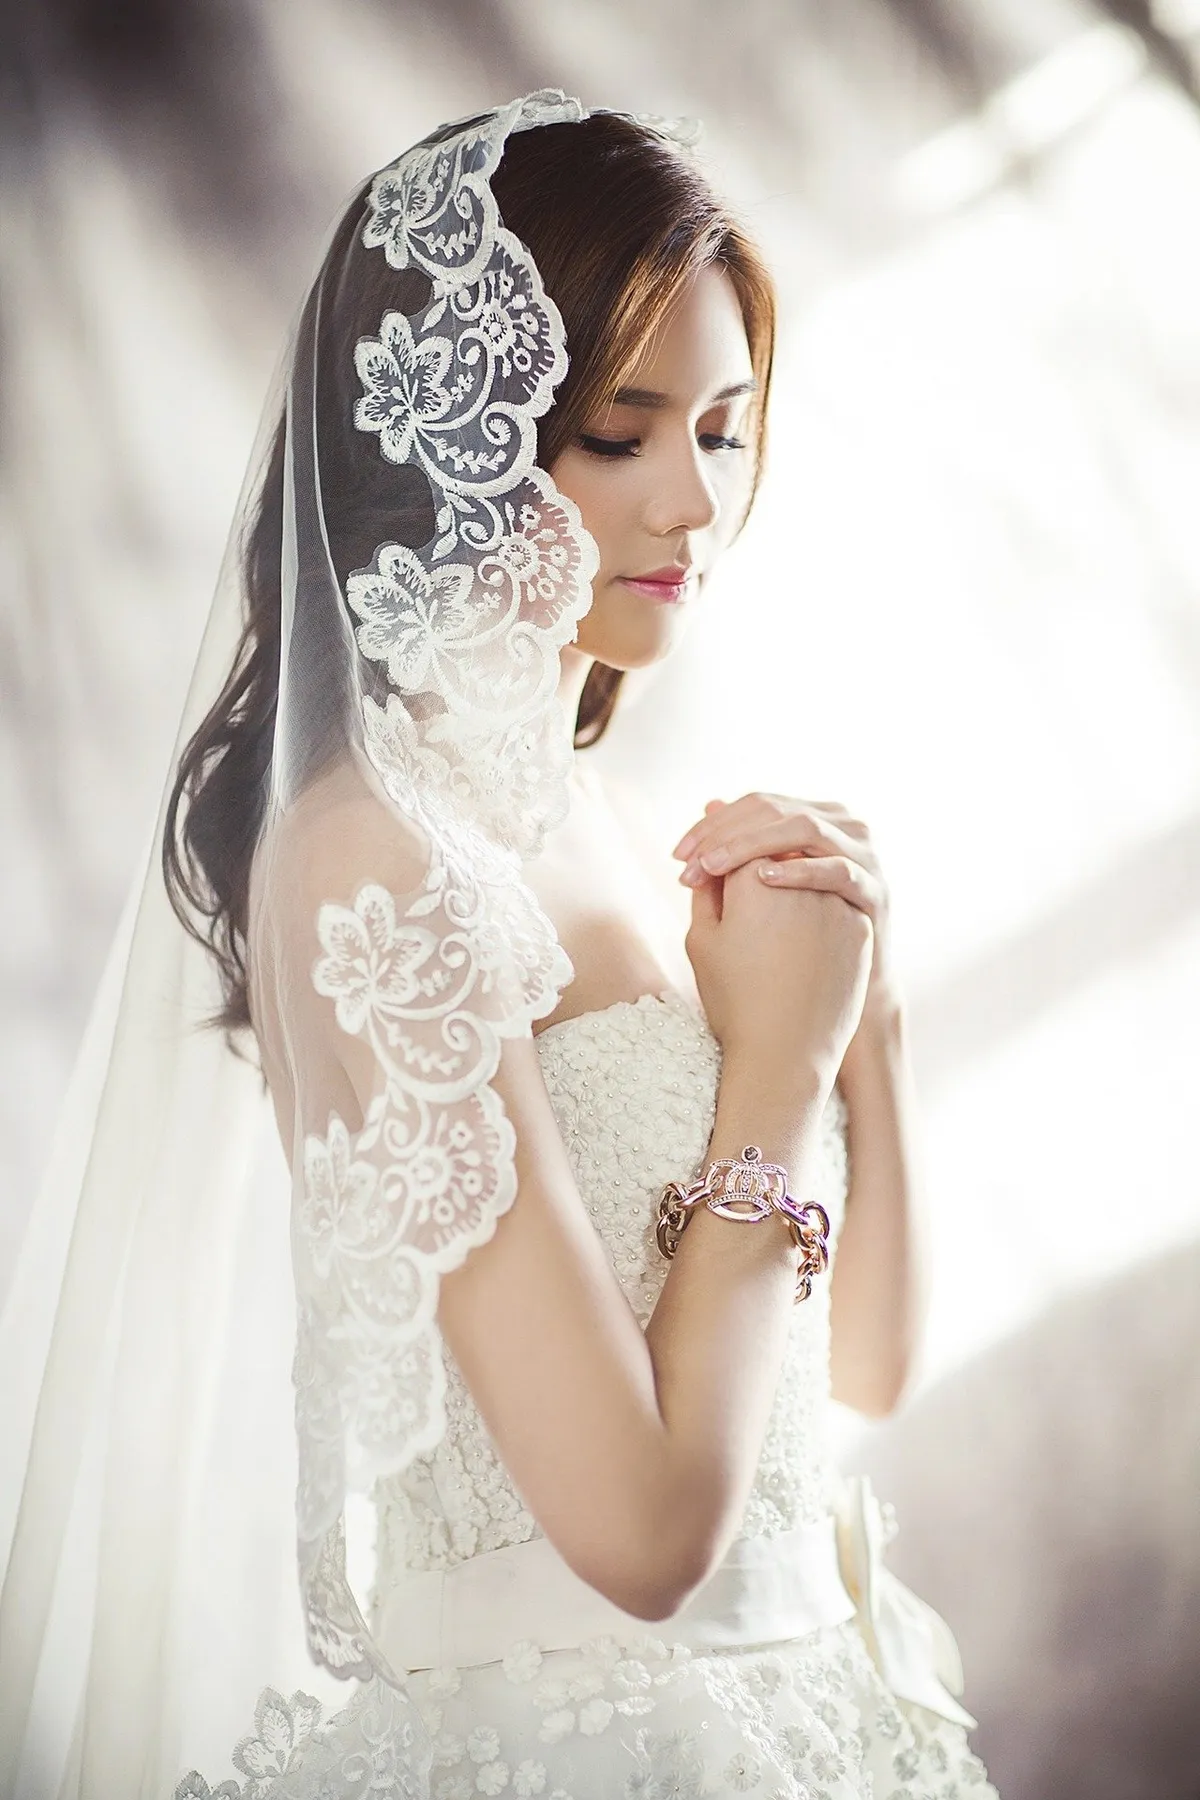 Une jeune mariée. | Photo : Pixabay